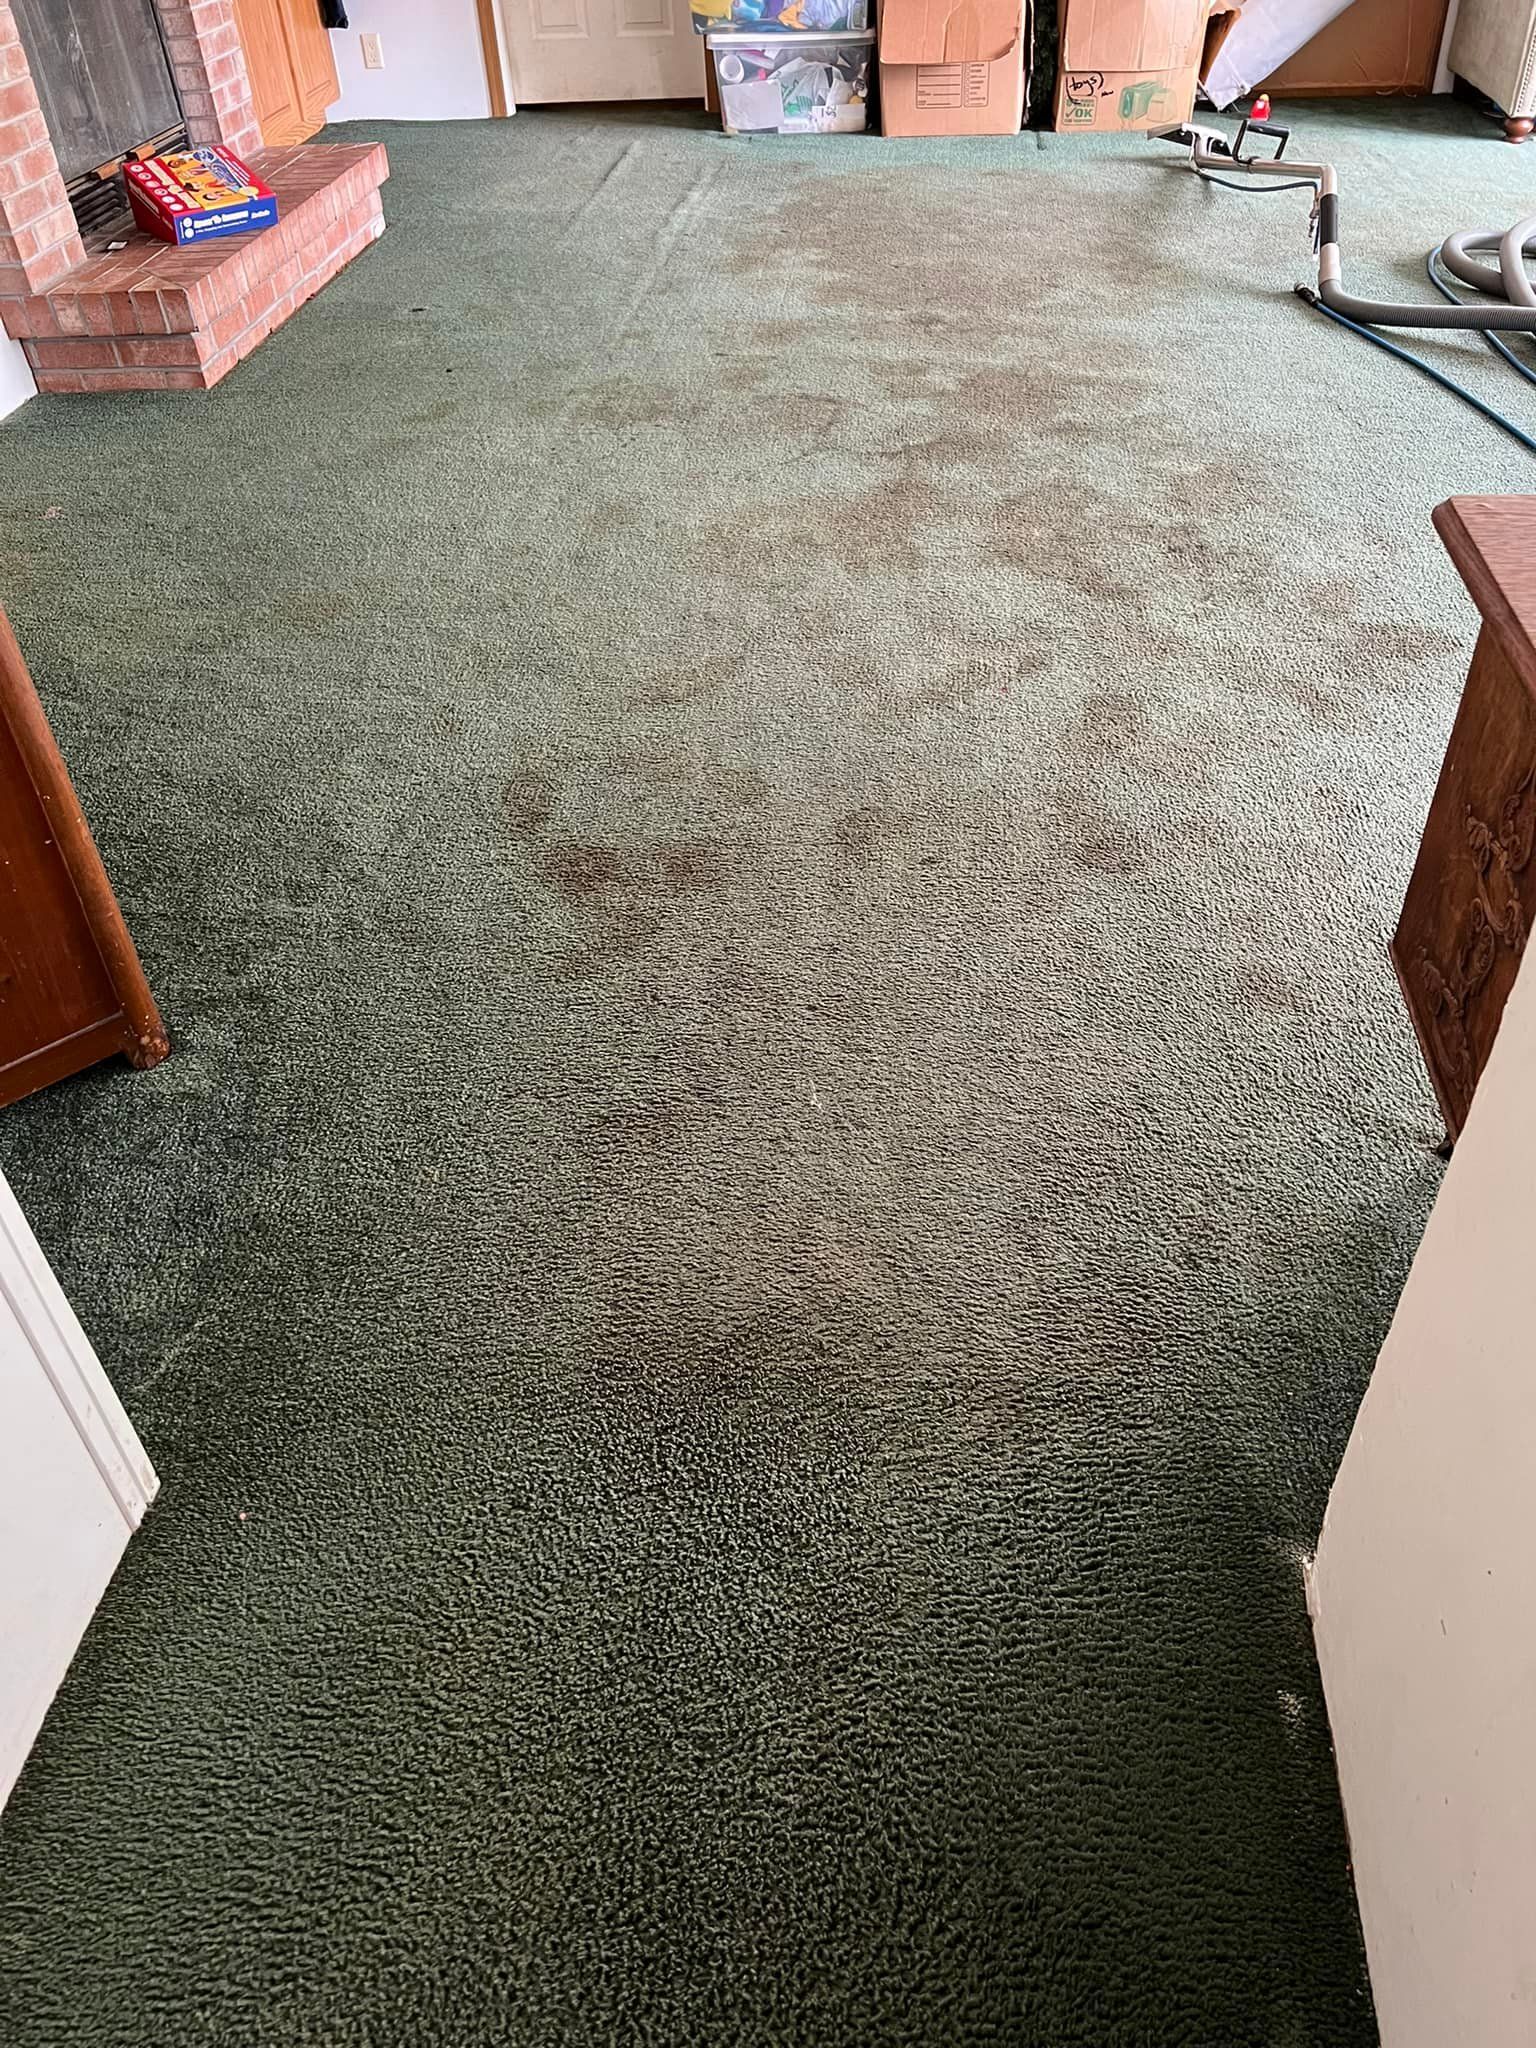 Masseys Chem Dry Carpet Cleaning